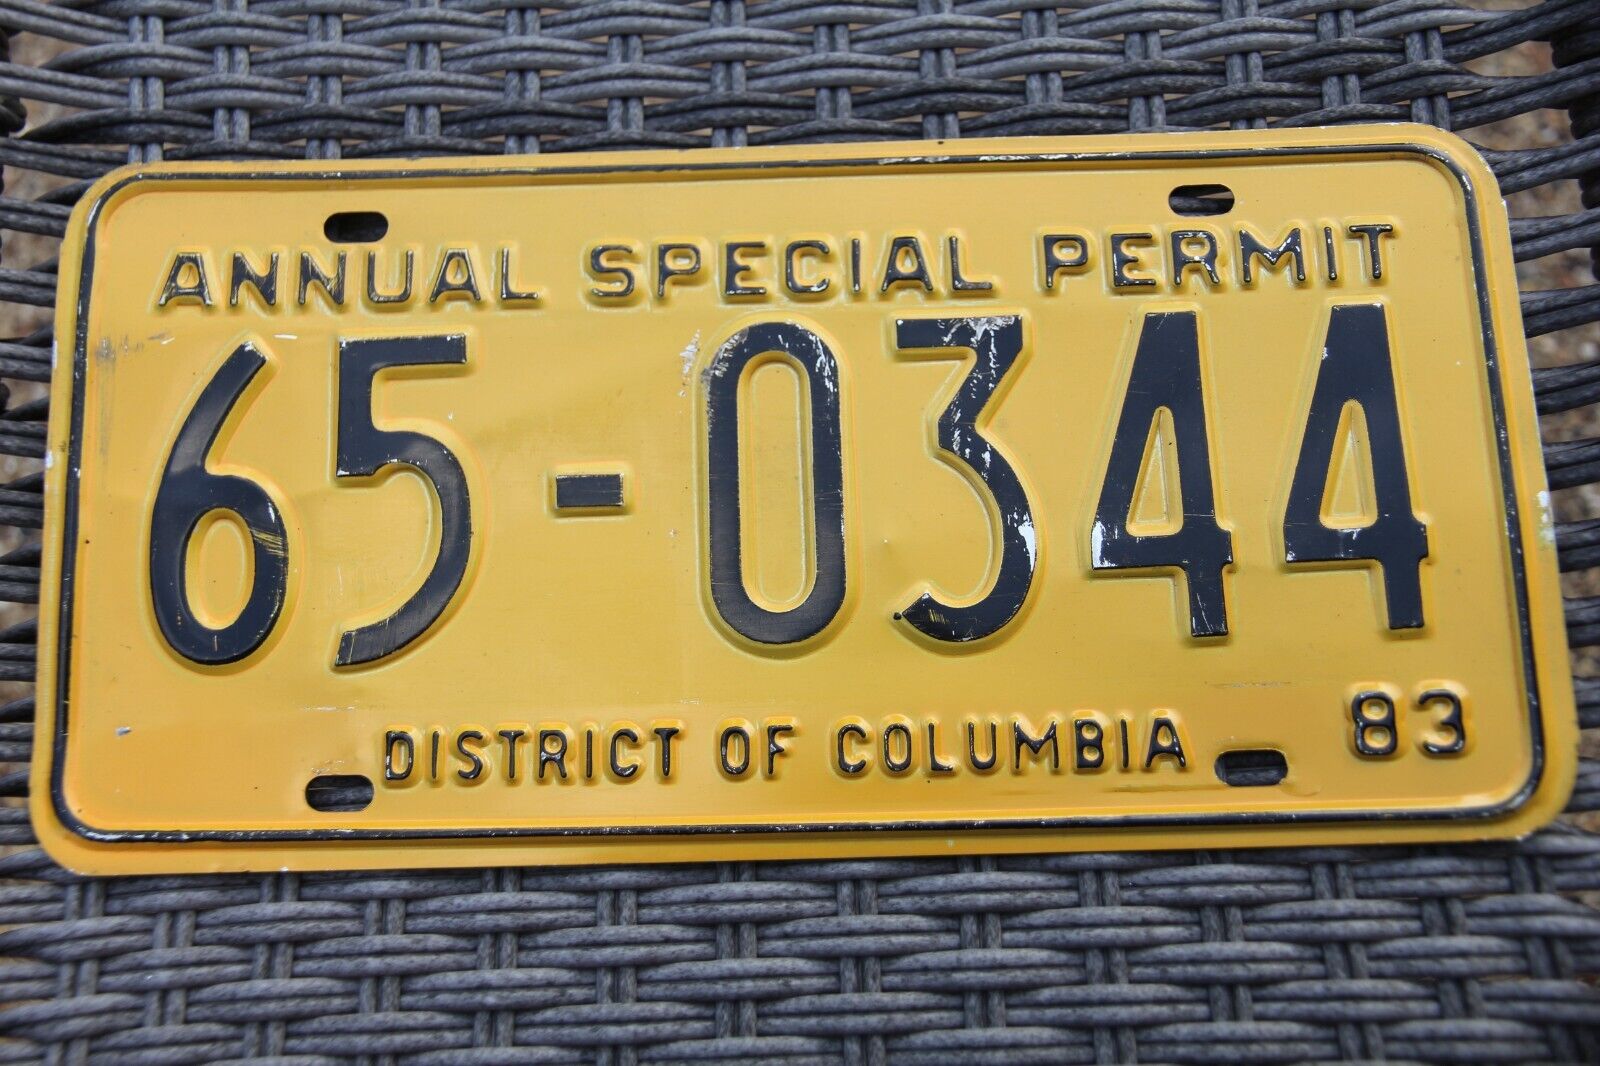 1983 WASHINGTON D.C.  License Plate * SPECIAL ANNUAL PERMIT  * DISTRICT COLUMBIA